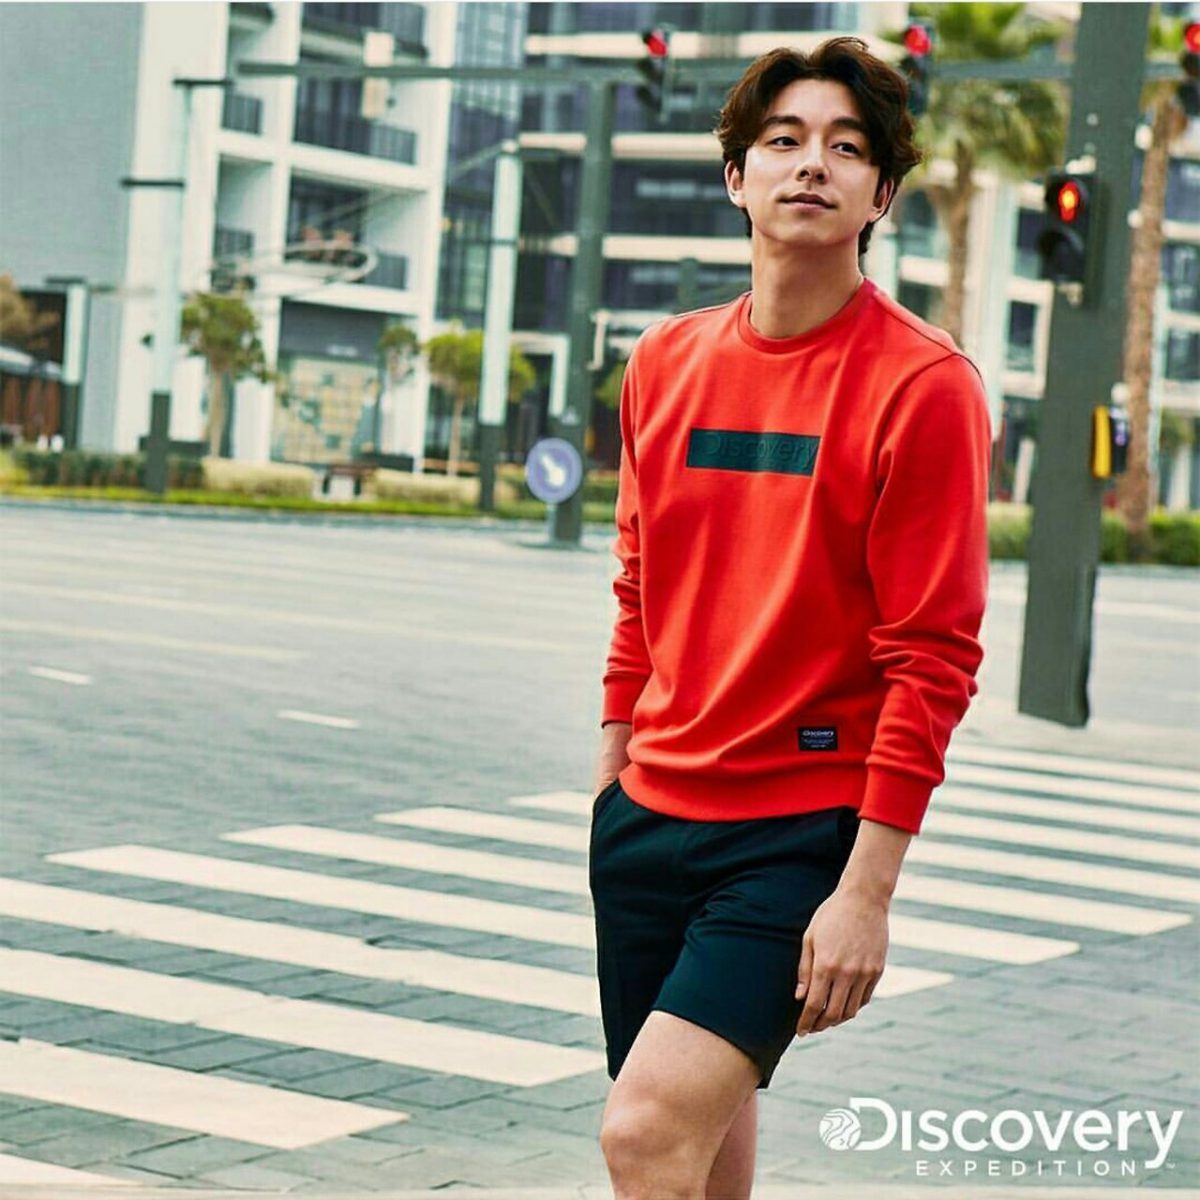 Гон Ю посетил Дубай для рекламы одежды бренда Discovery Expedition